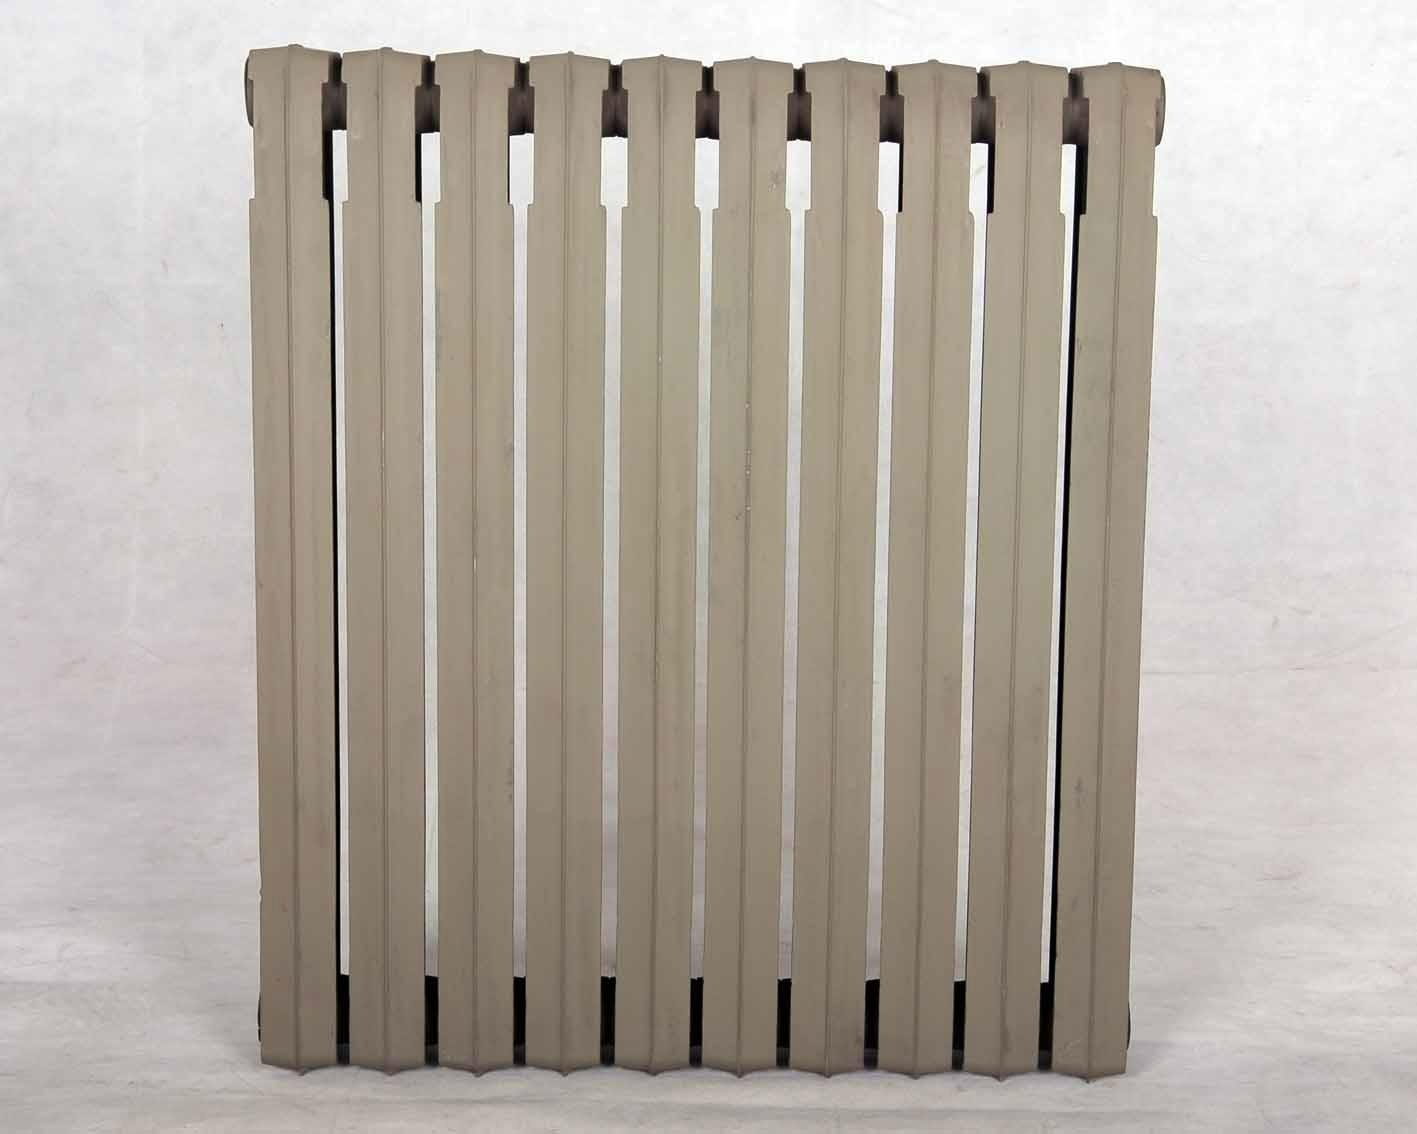 IM3-710 cast iron radiator 3